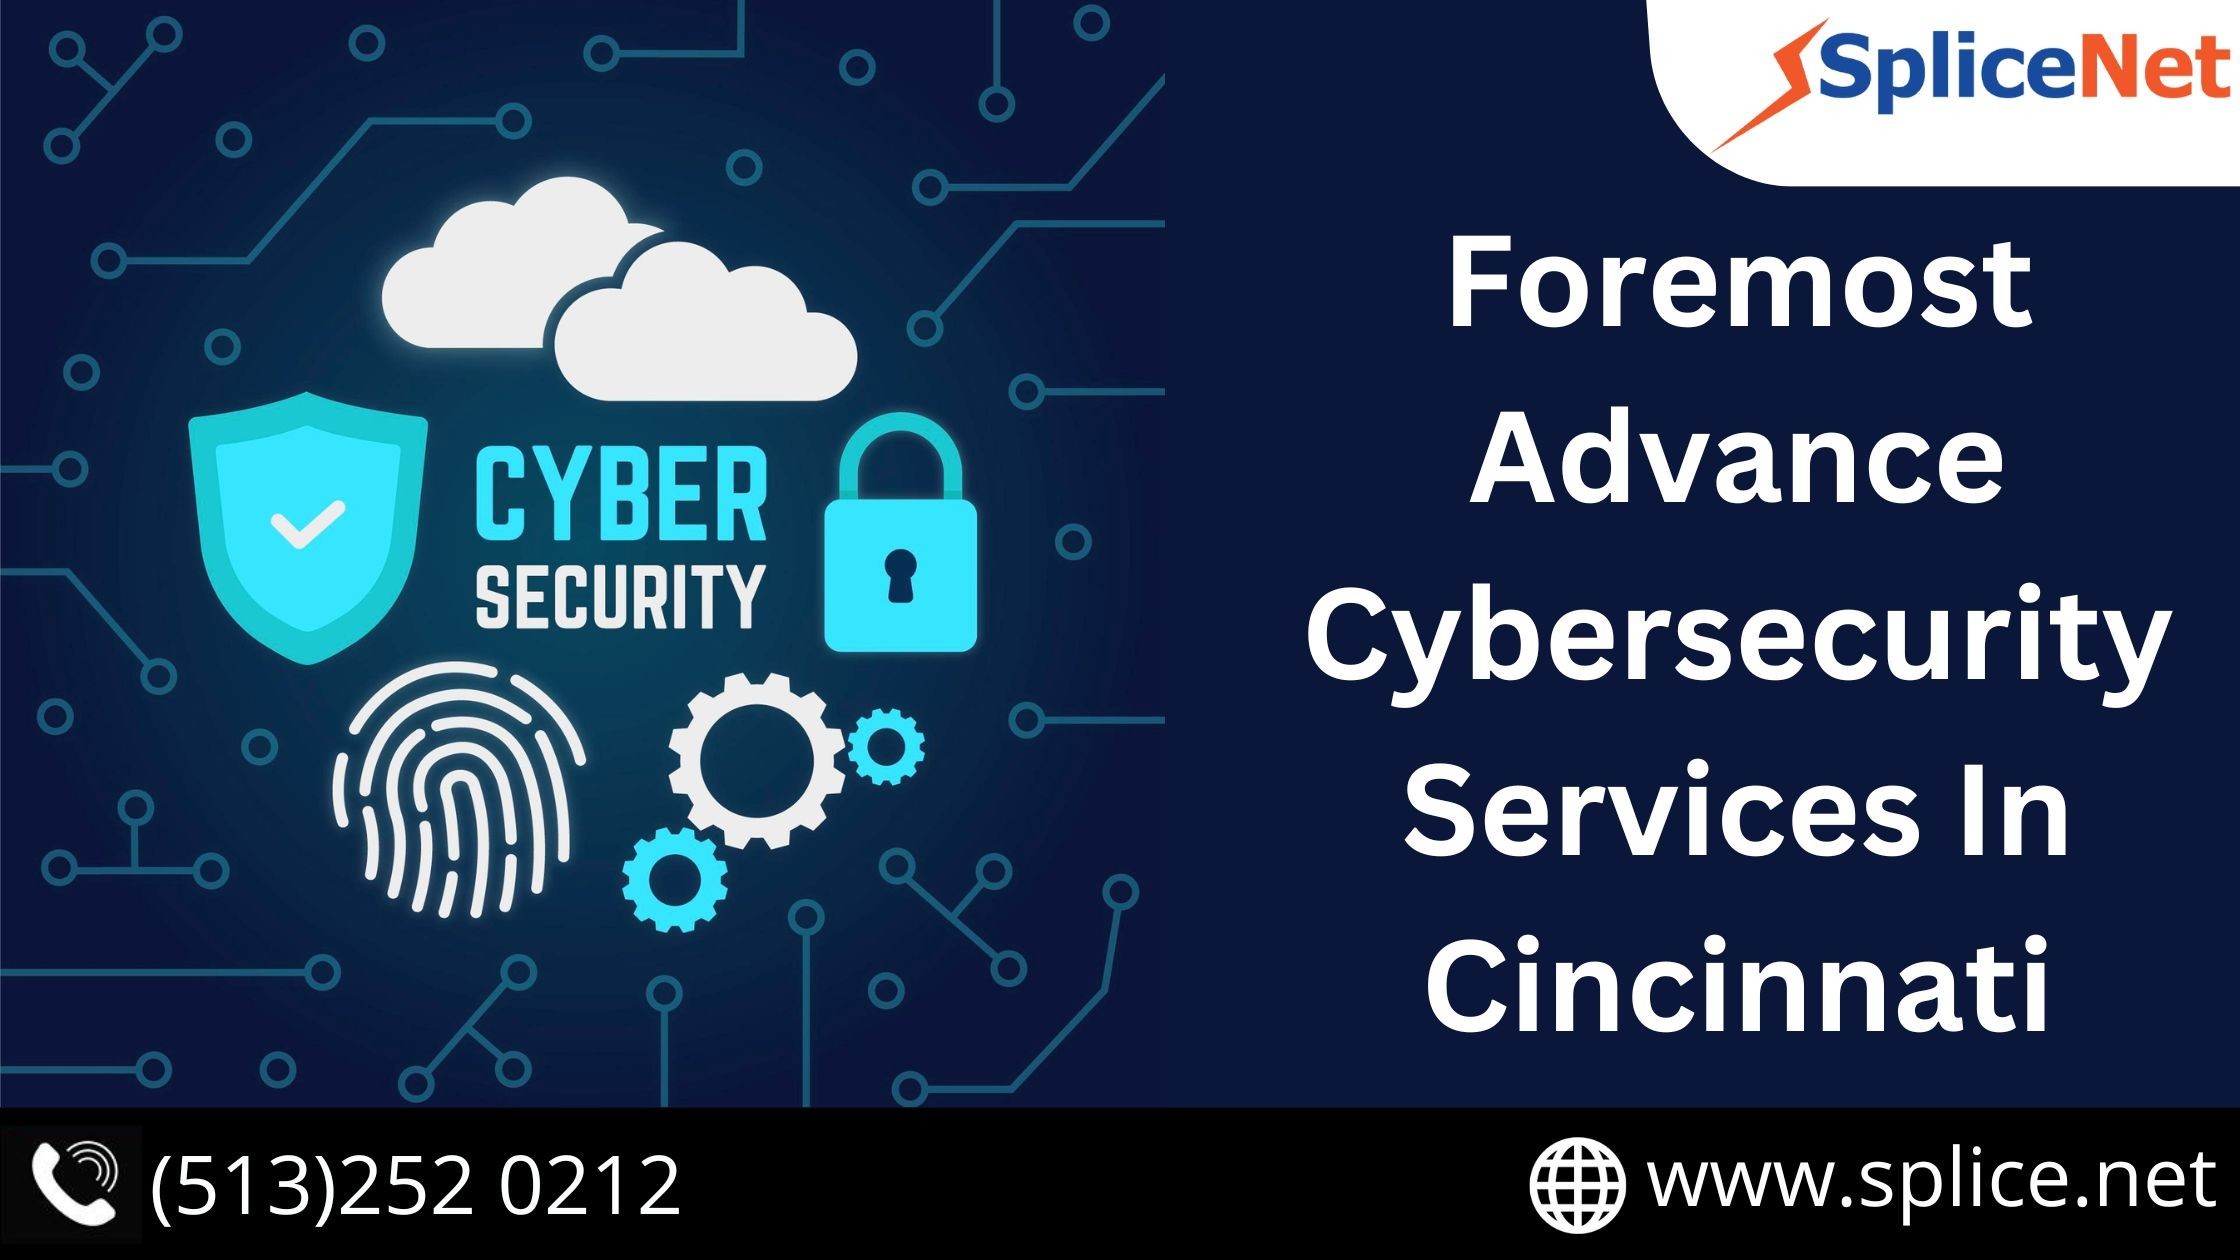 Foremost Advance Cybersecurity Services In Cincinnati